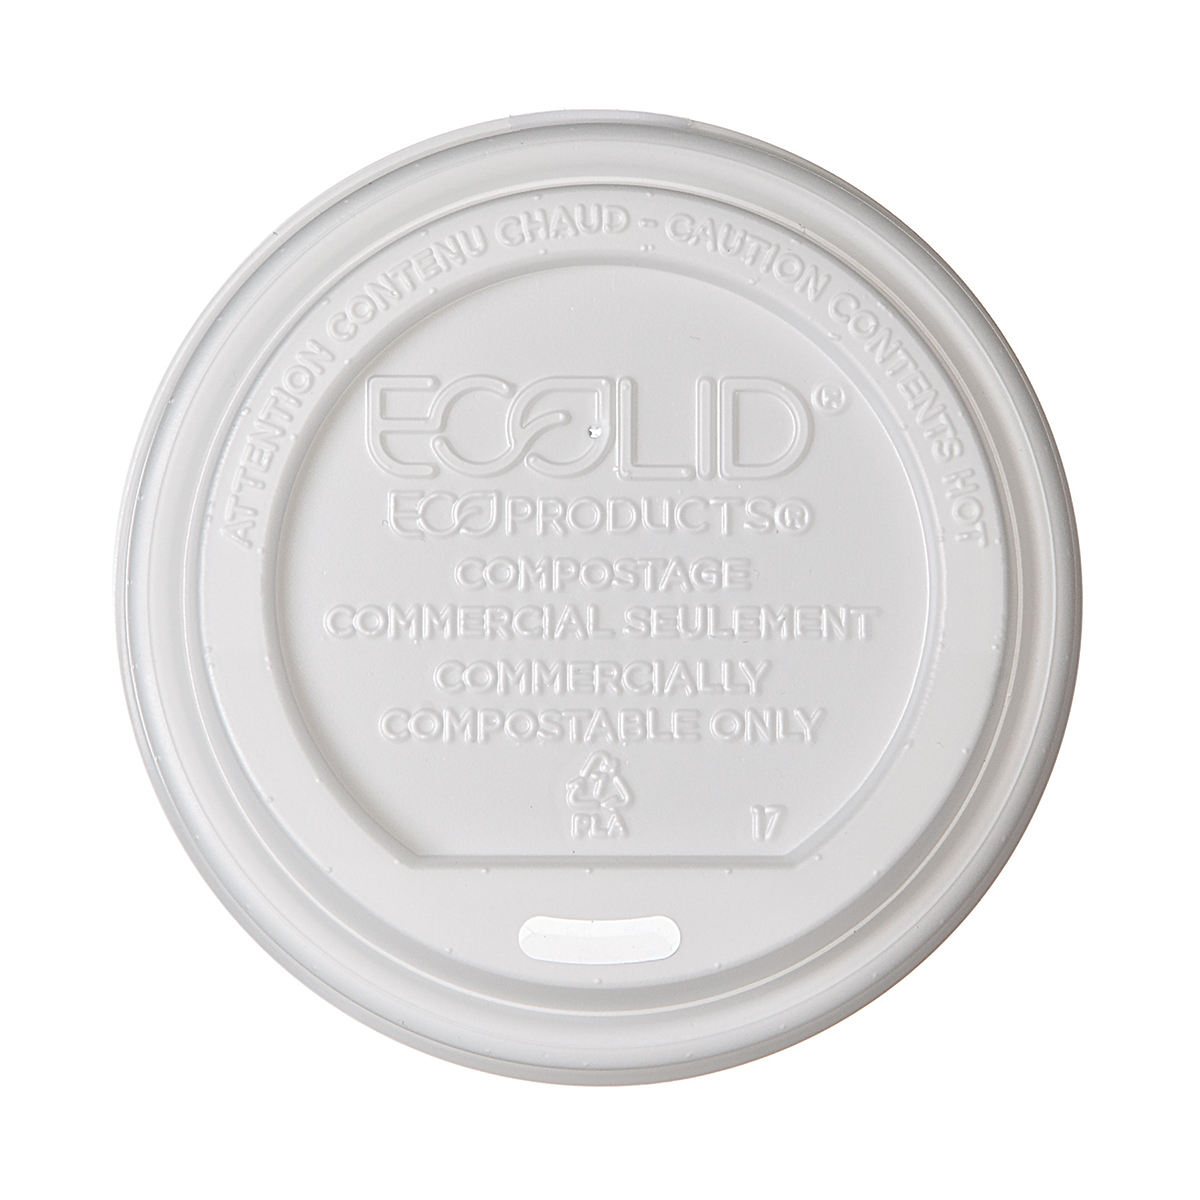 EcoLid Renewable &amp; Compostable Hot Cup Lids,